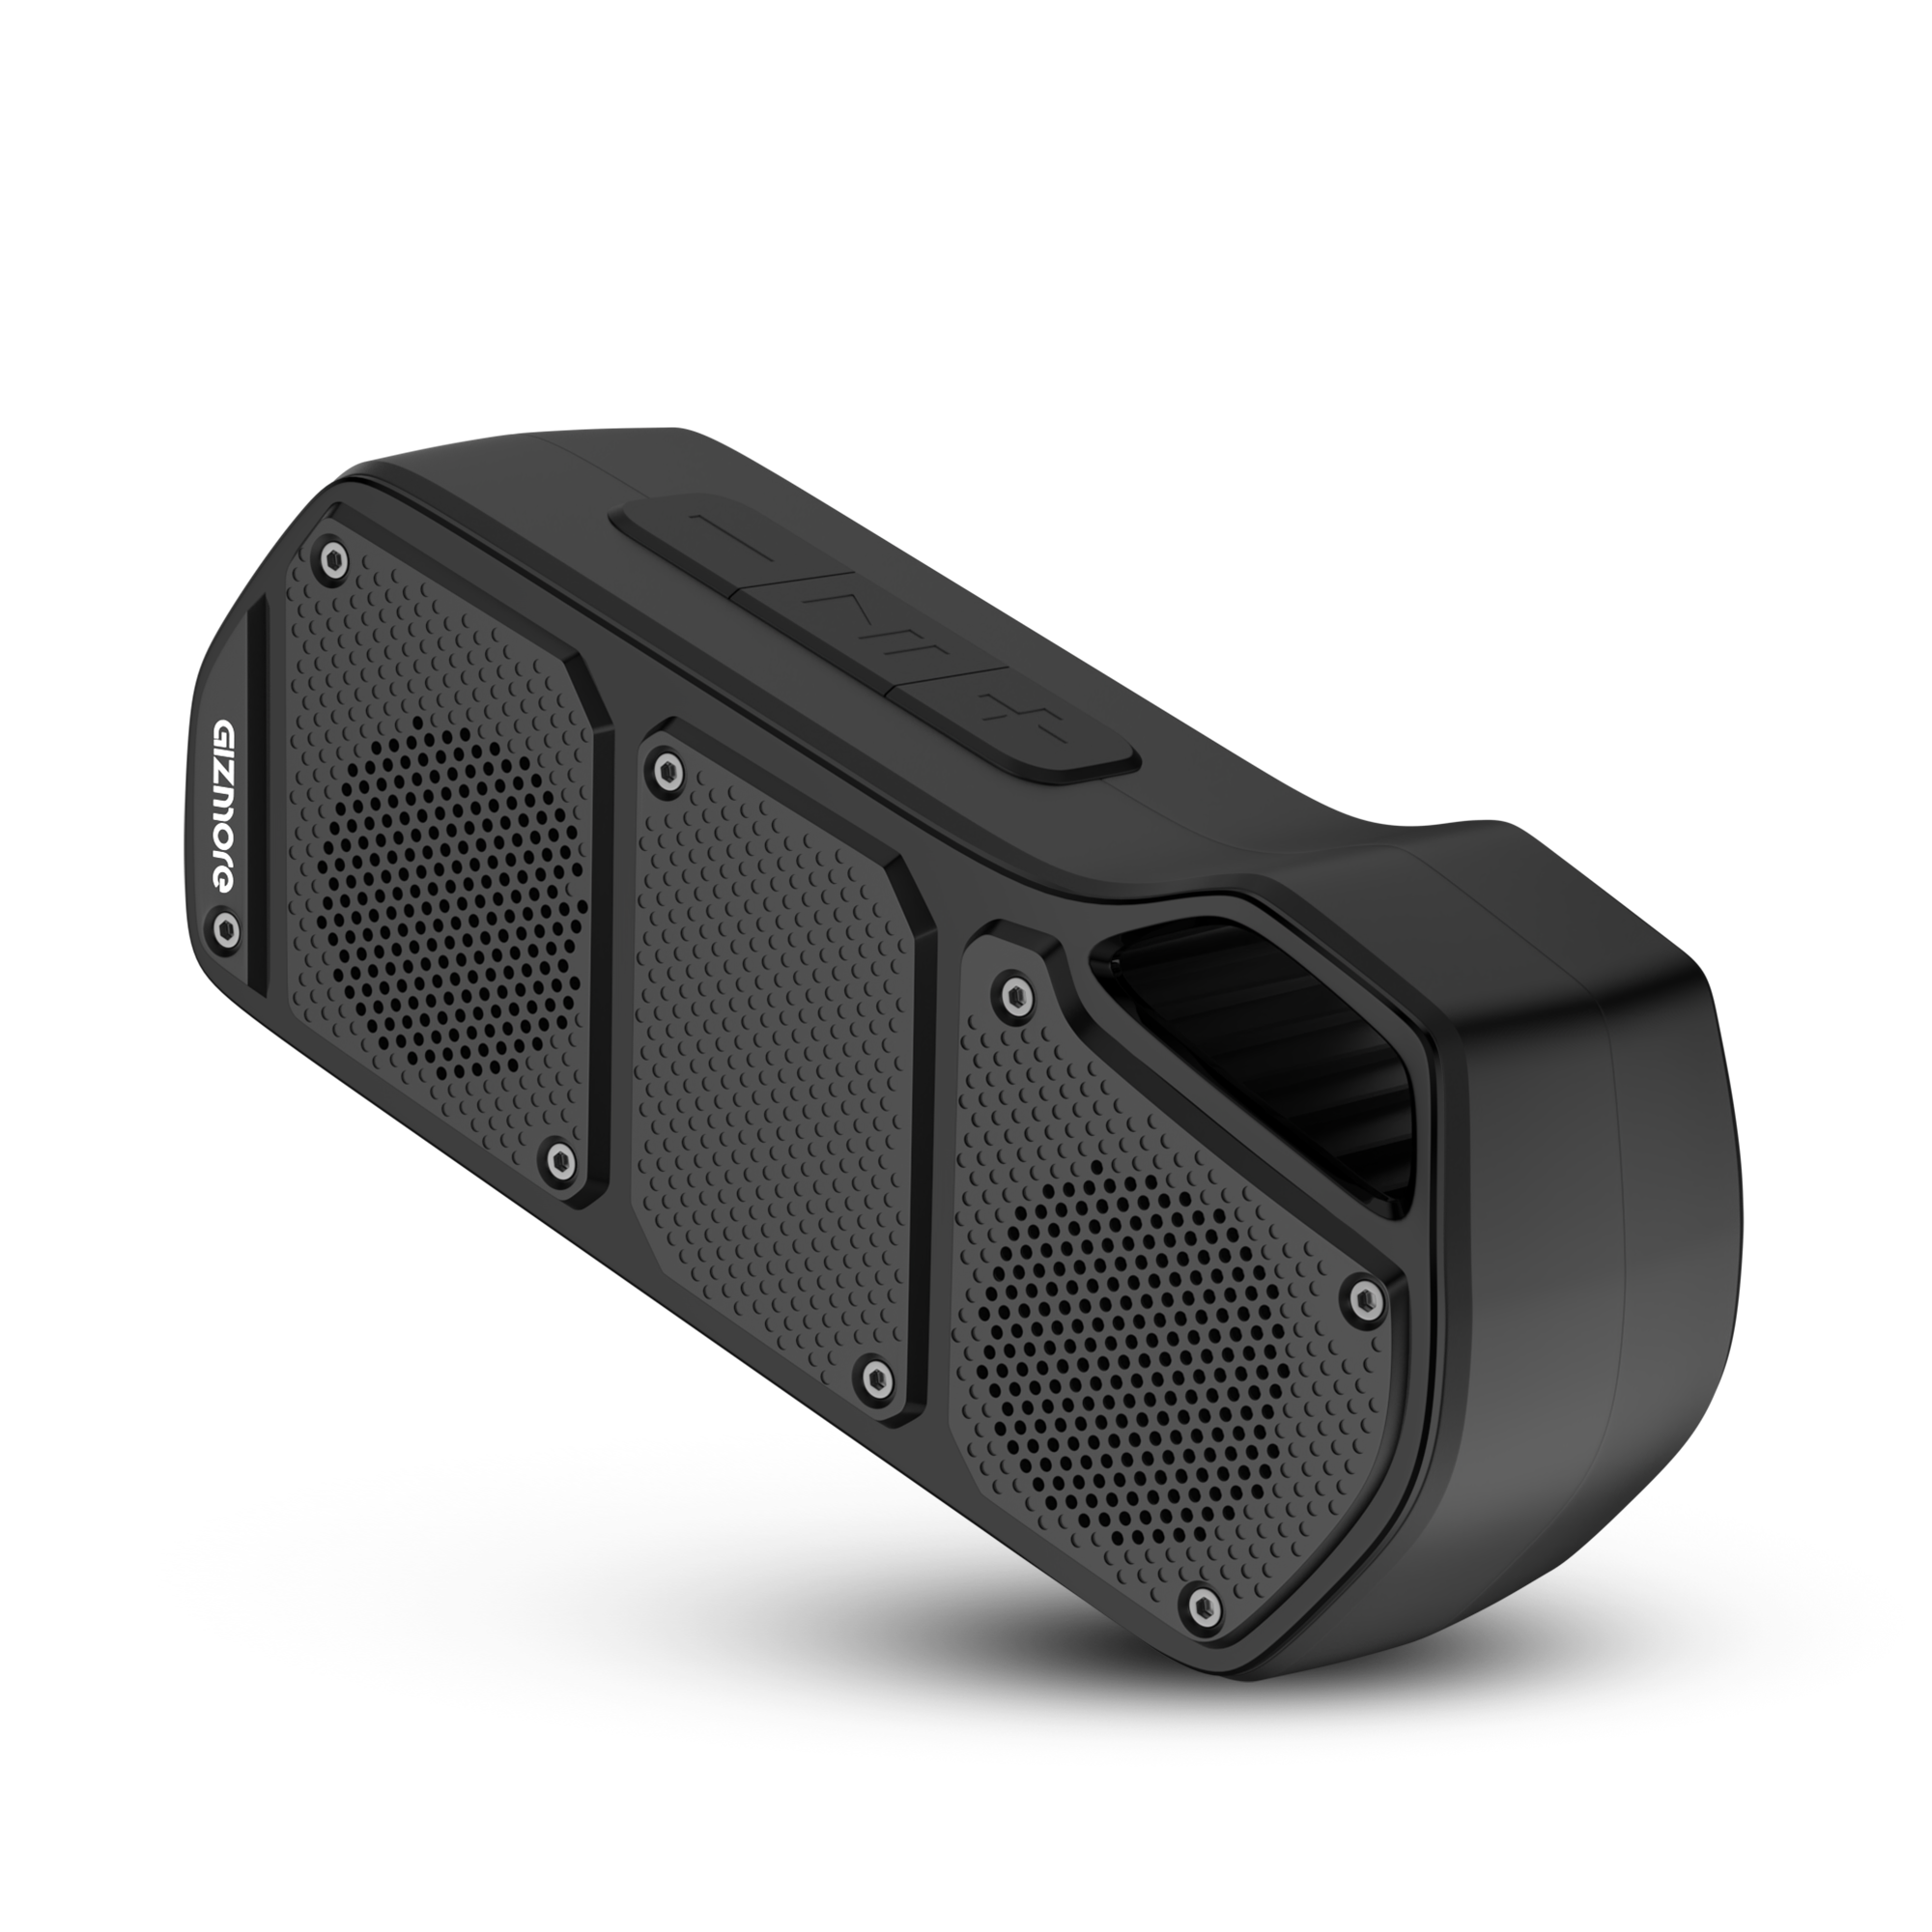 Gizmore GIZ MS508 Music Buddy Portable BT Speaker with Function 8W Bluetooth Speaker